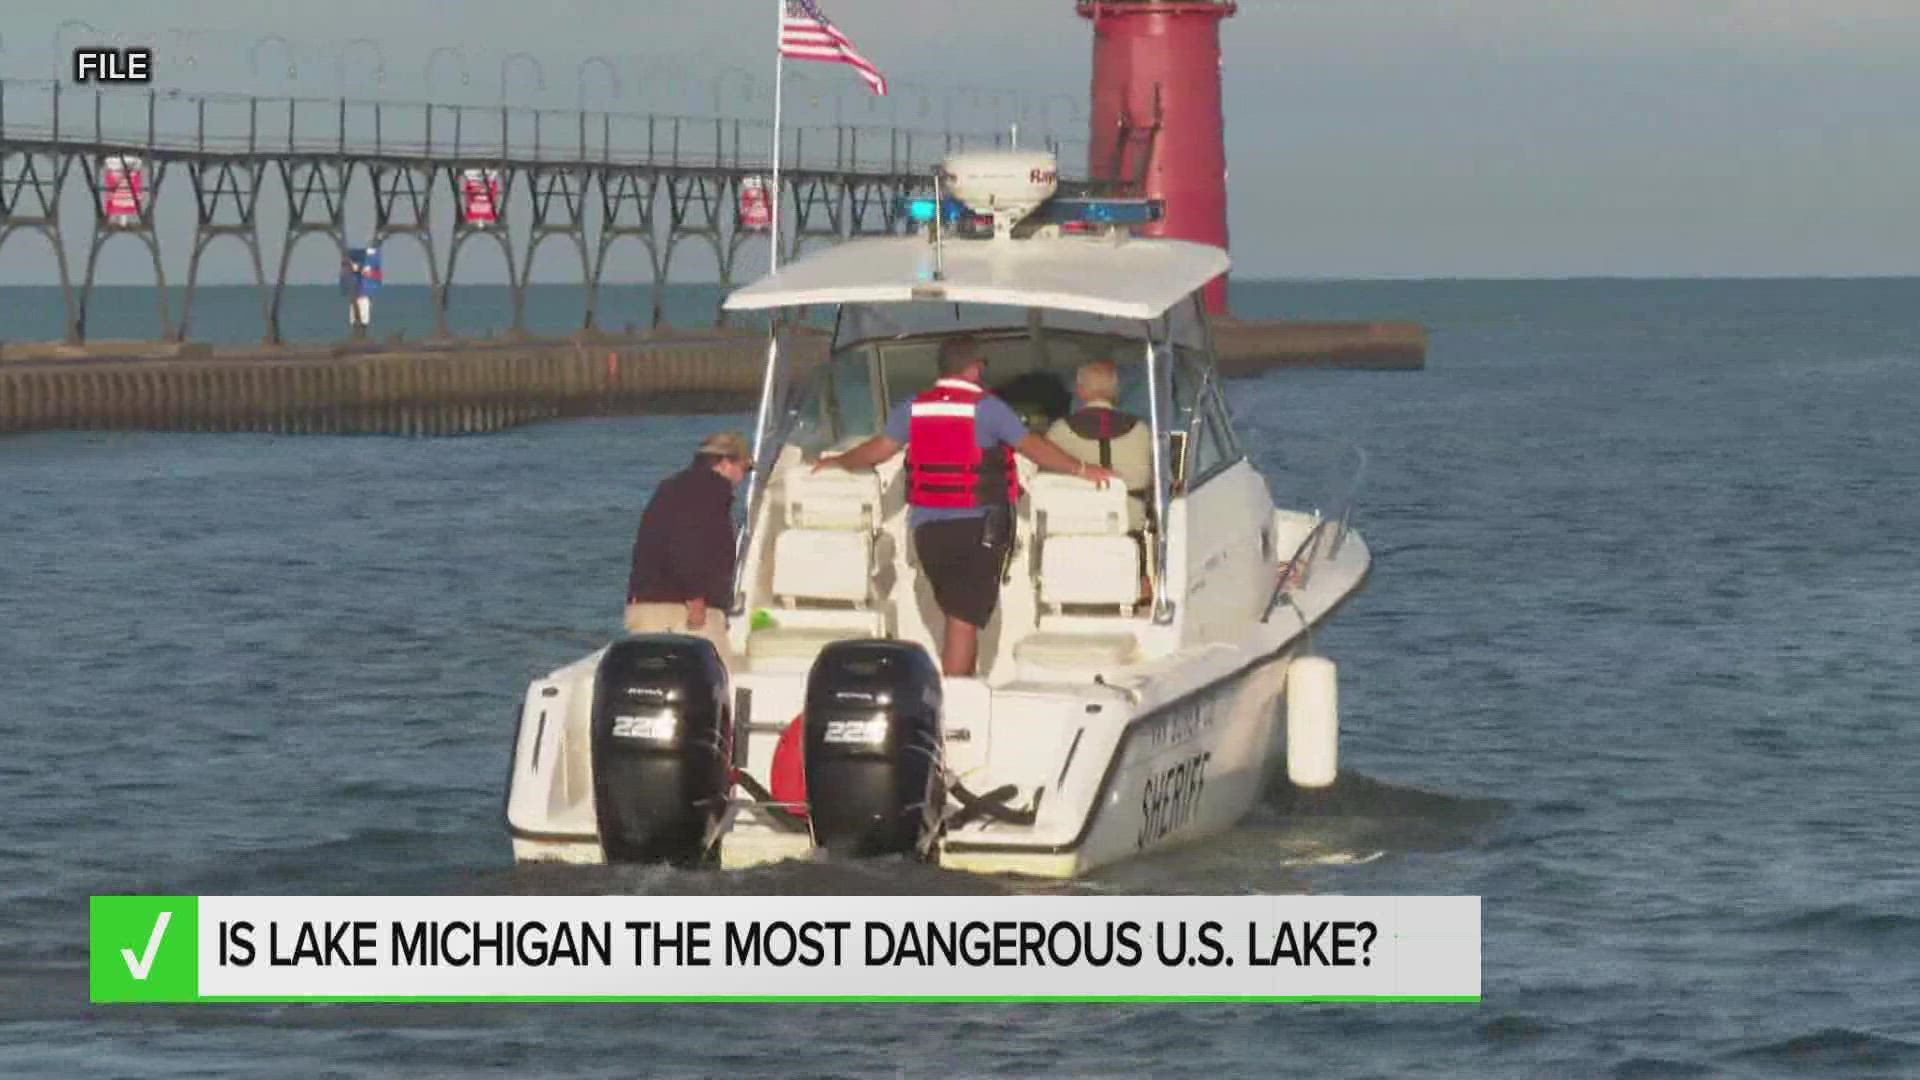 Is Lake Michigan the most dangerous U.S. lake? Let's verify.